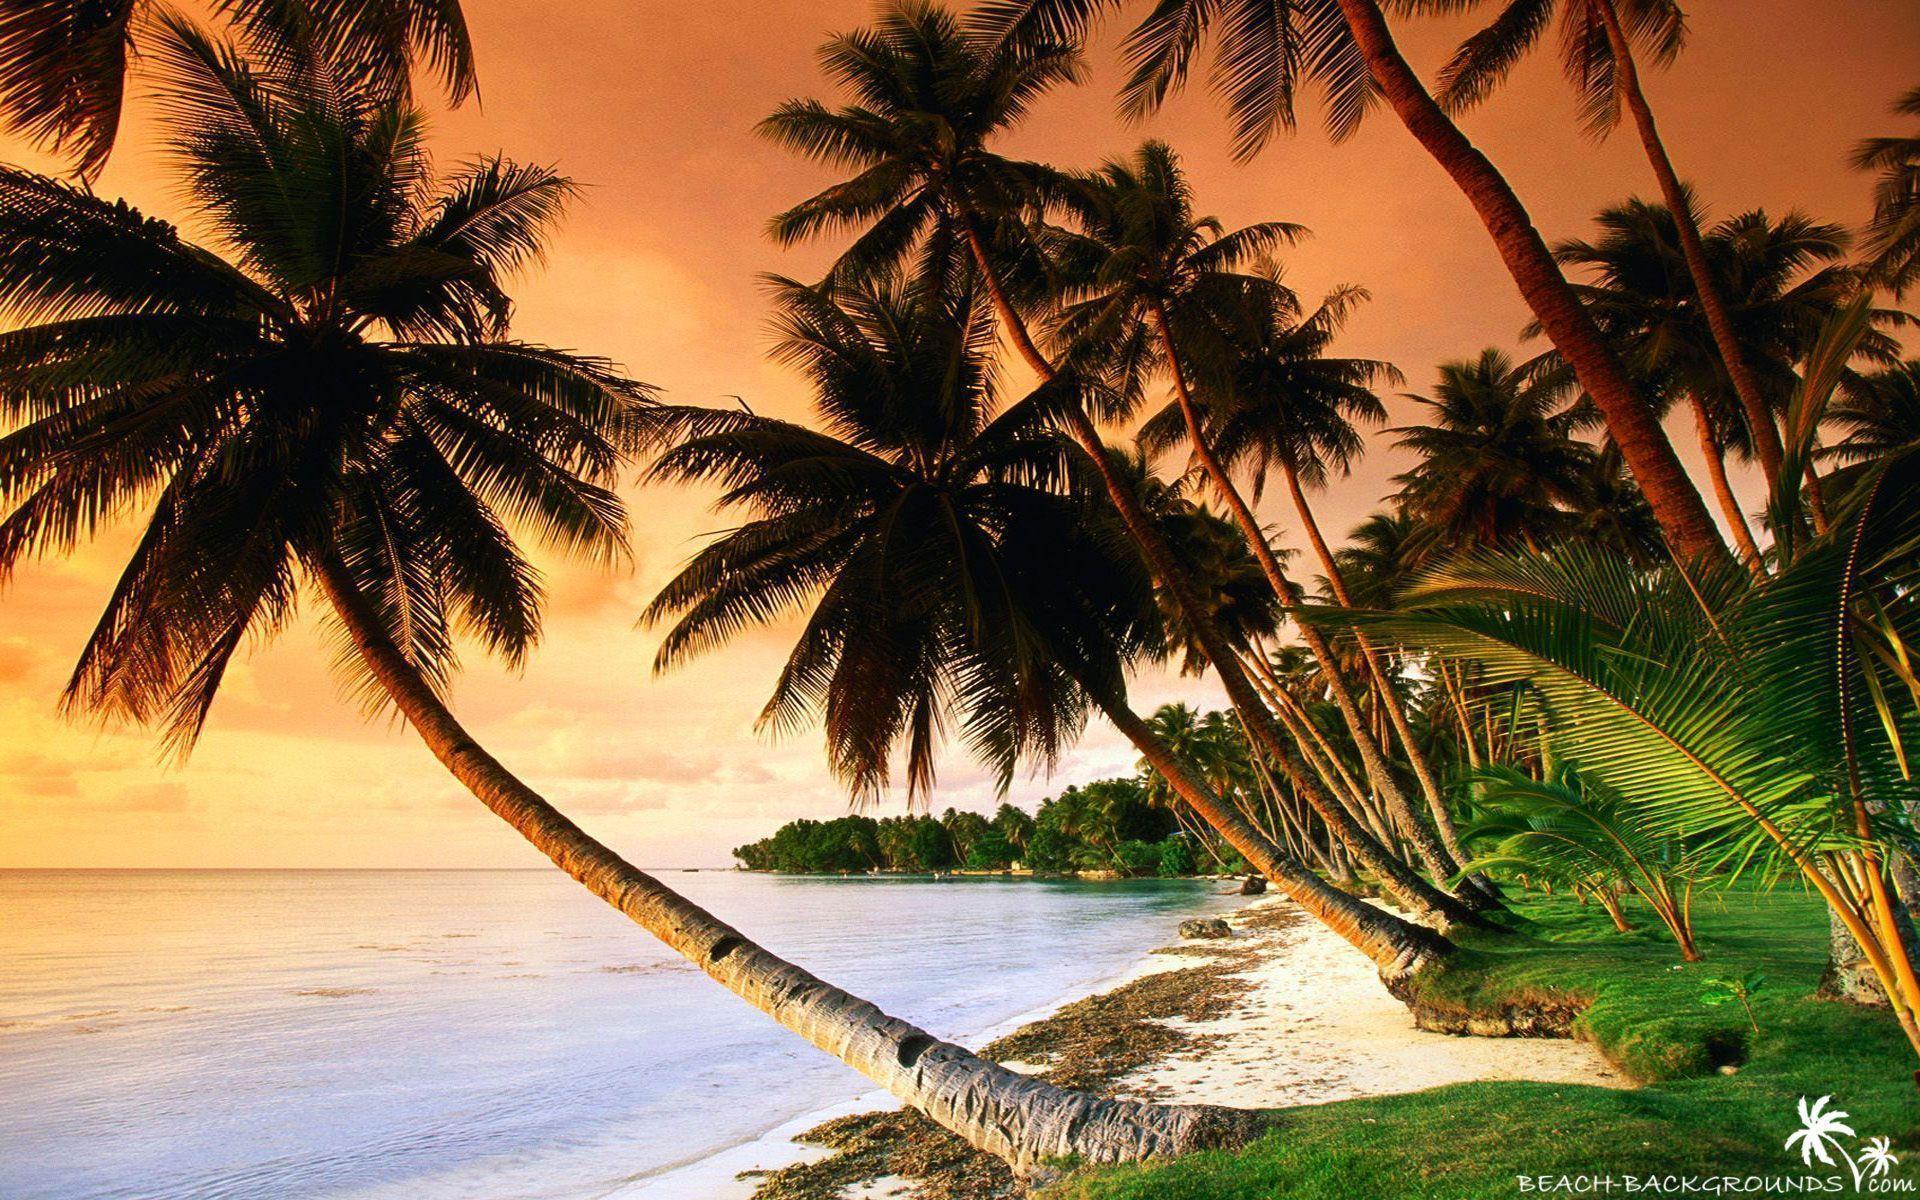 Palm Tree Beach Sunset Wallpaper